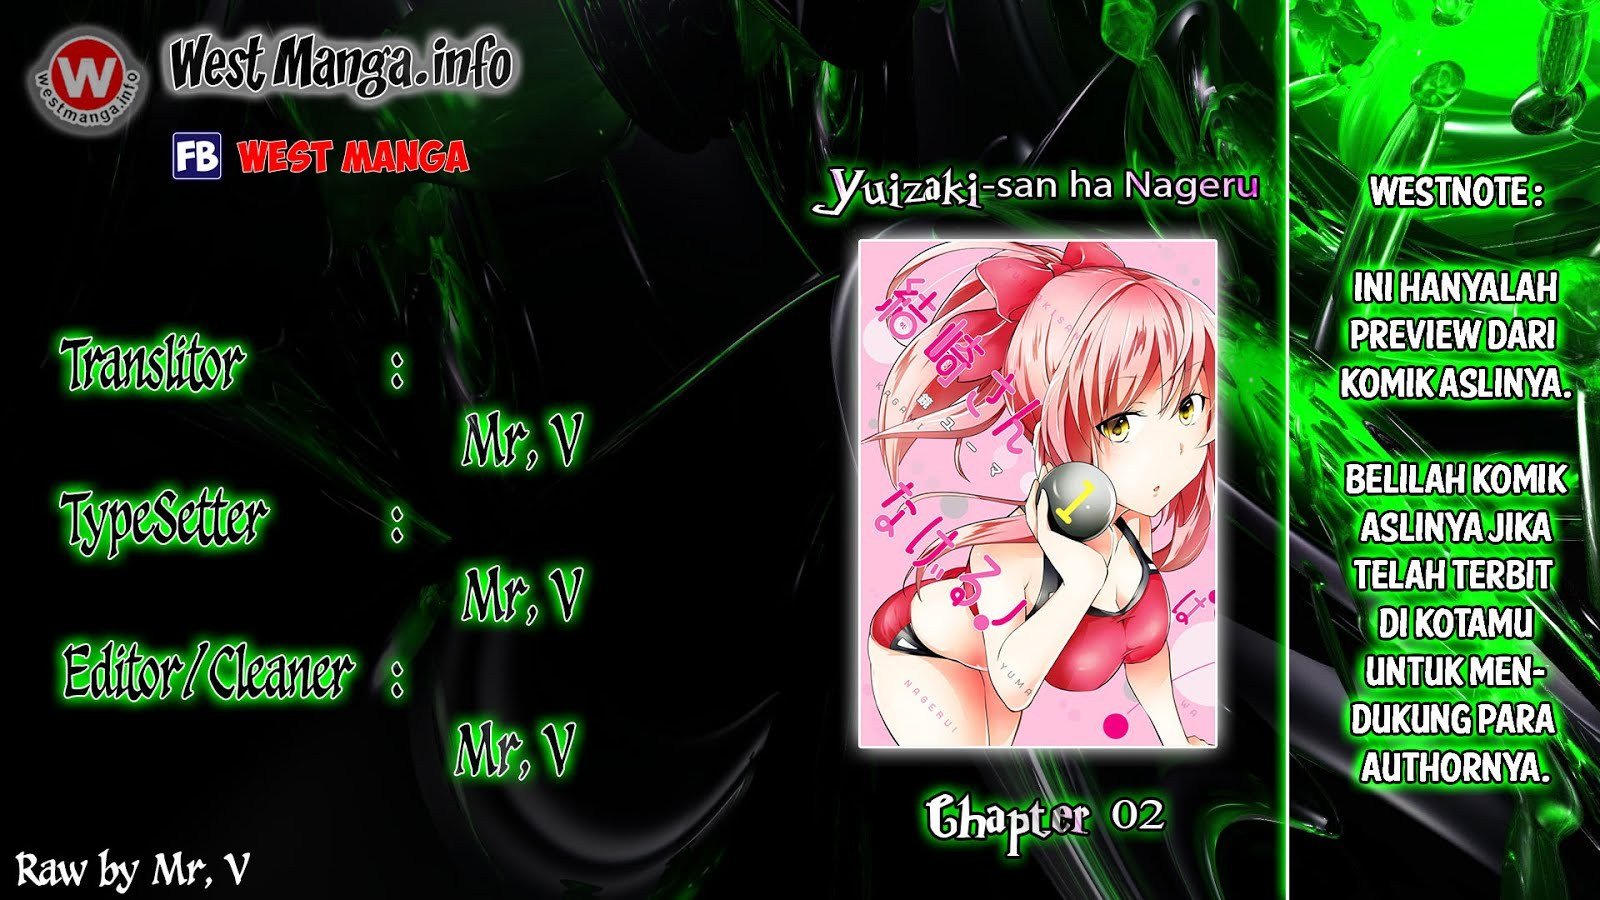 Yuizaki-san wa Nageru! Chapter 02